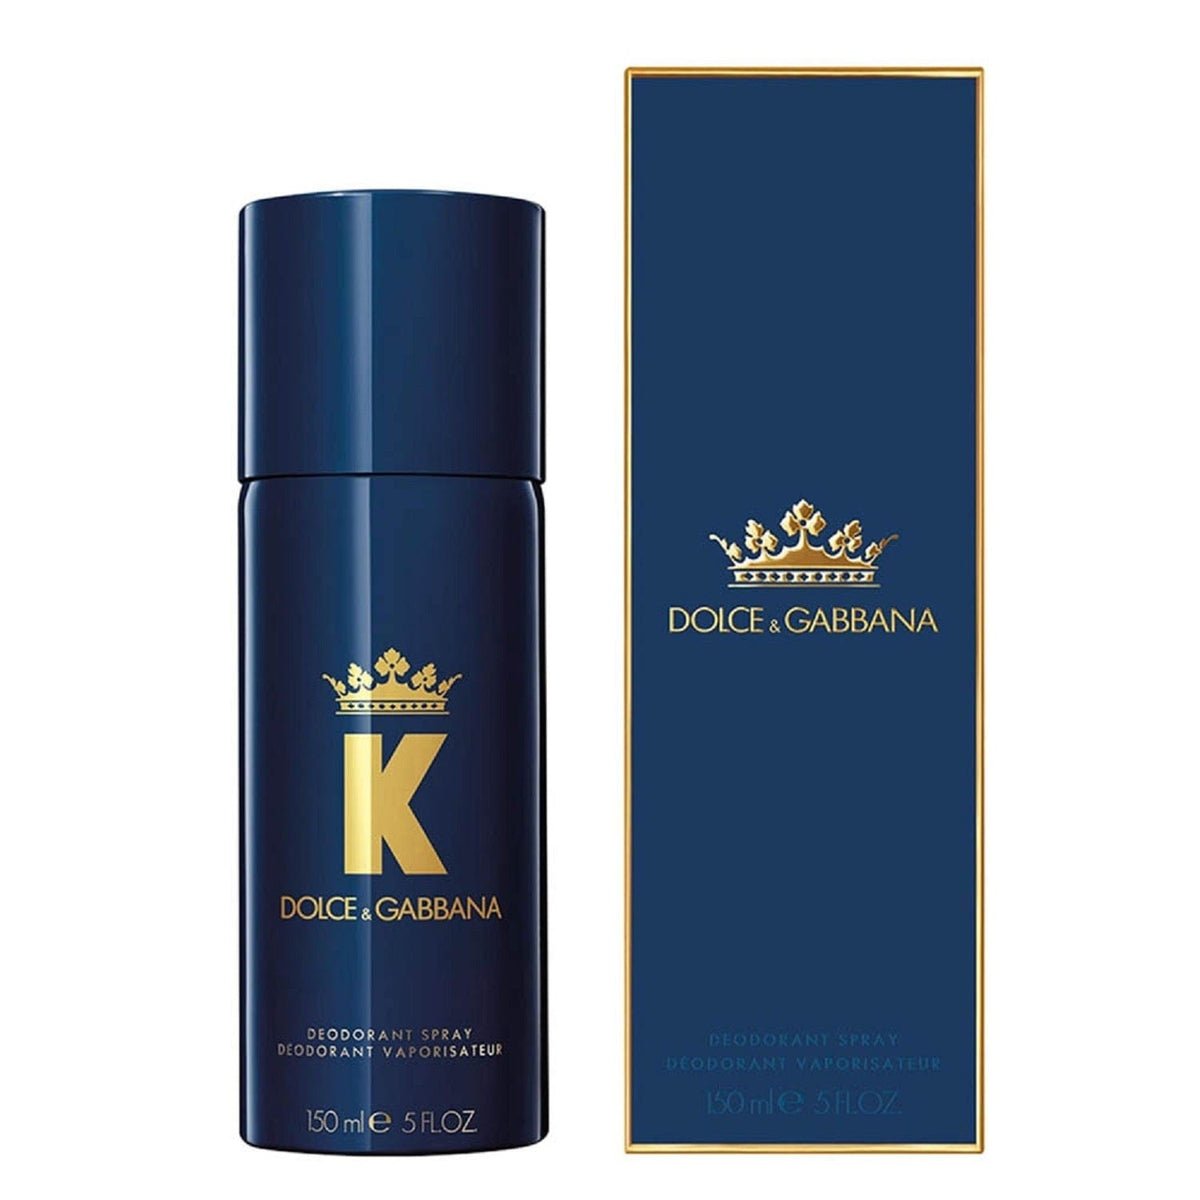 Dolce & Gabbana K Deodorant Spray | My Perfume Shop Australia